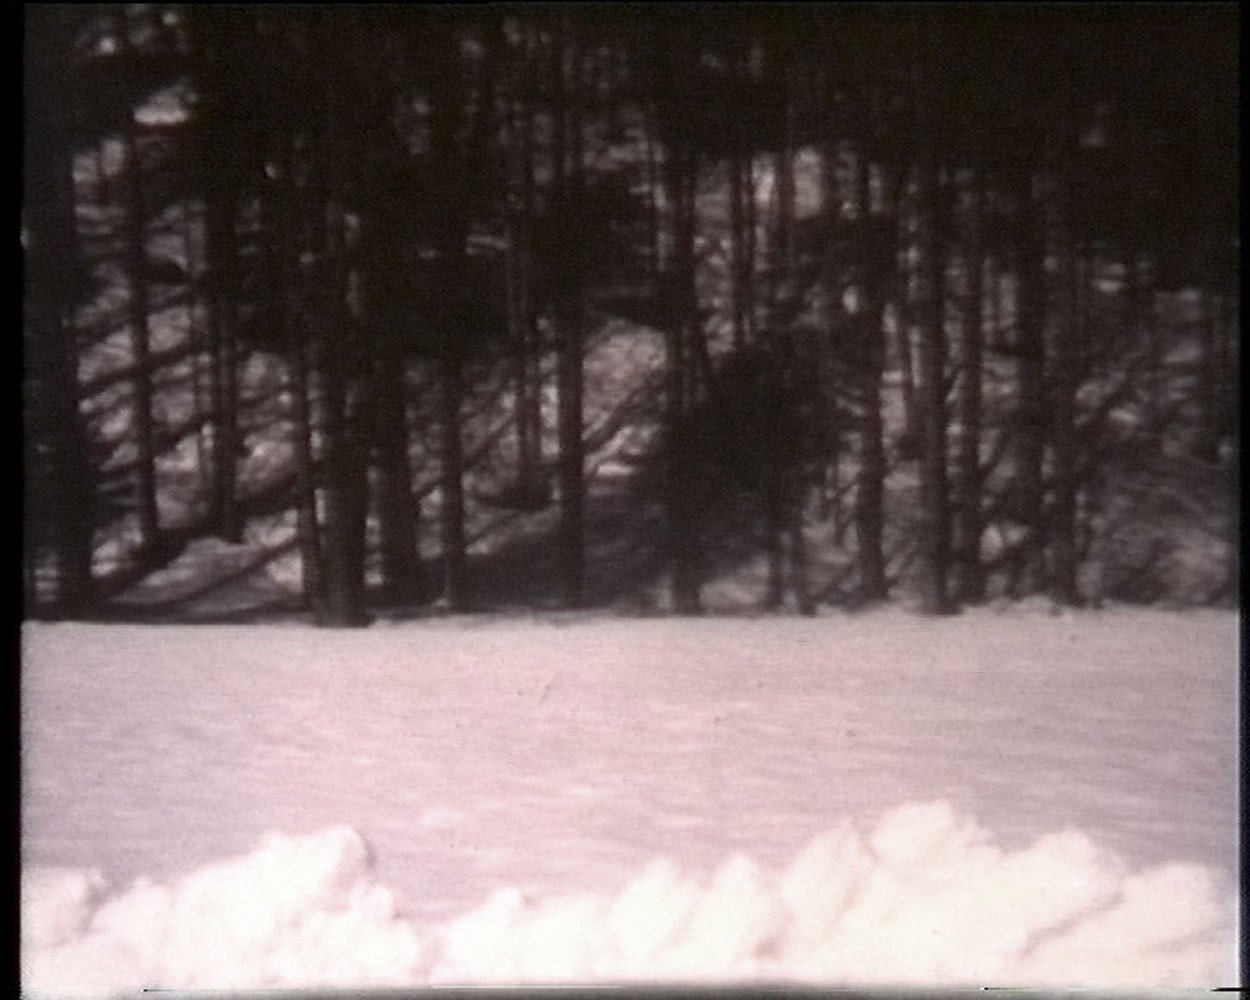 Schneewand, 3min. loop, 16mm, 2005